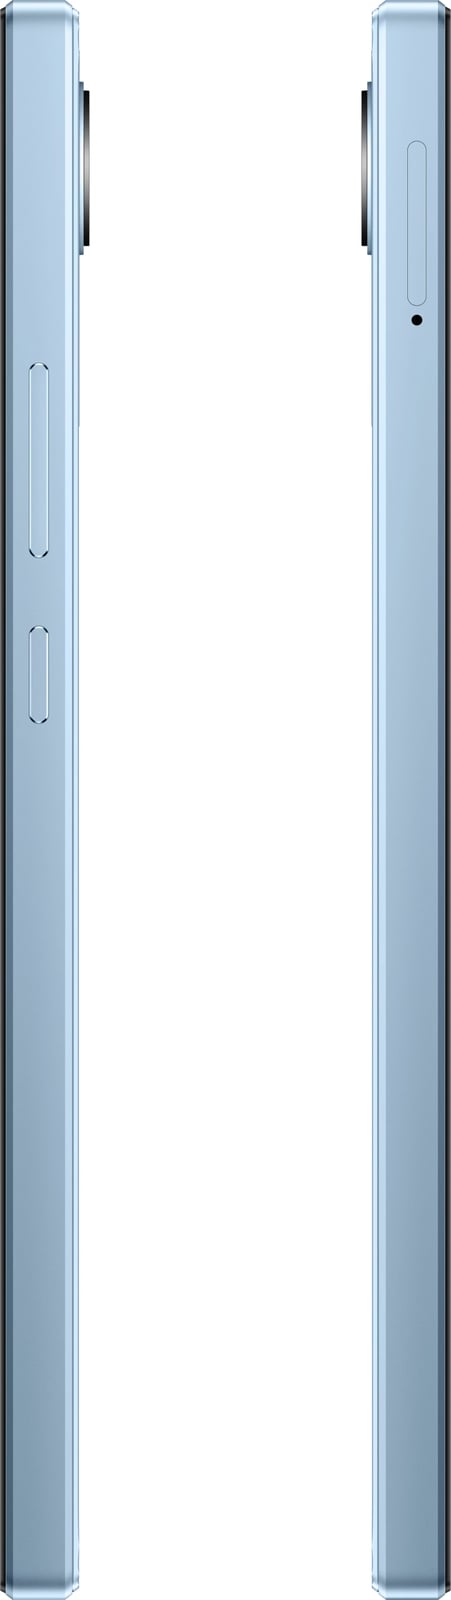 Celular Realme C30, 6.5", 3+32GB, DS, i kaltër